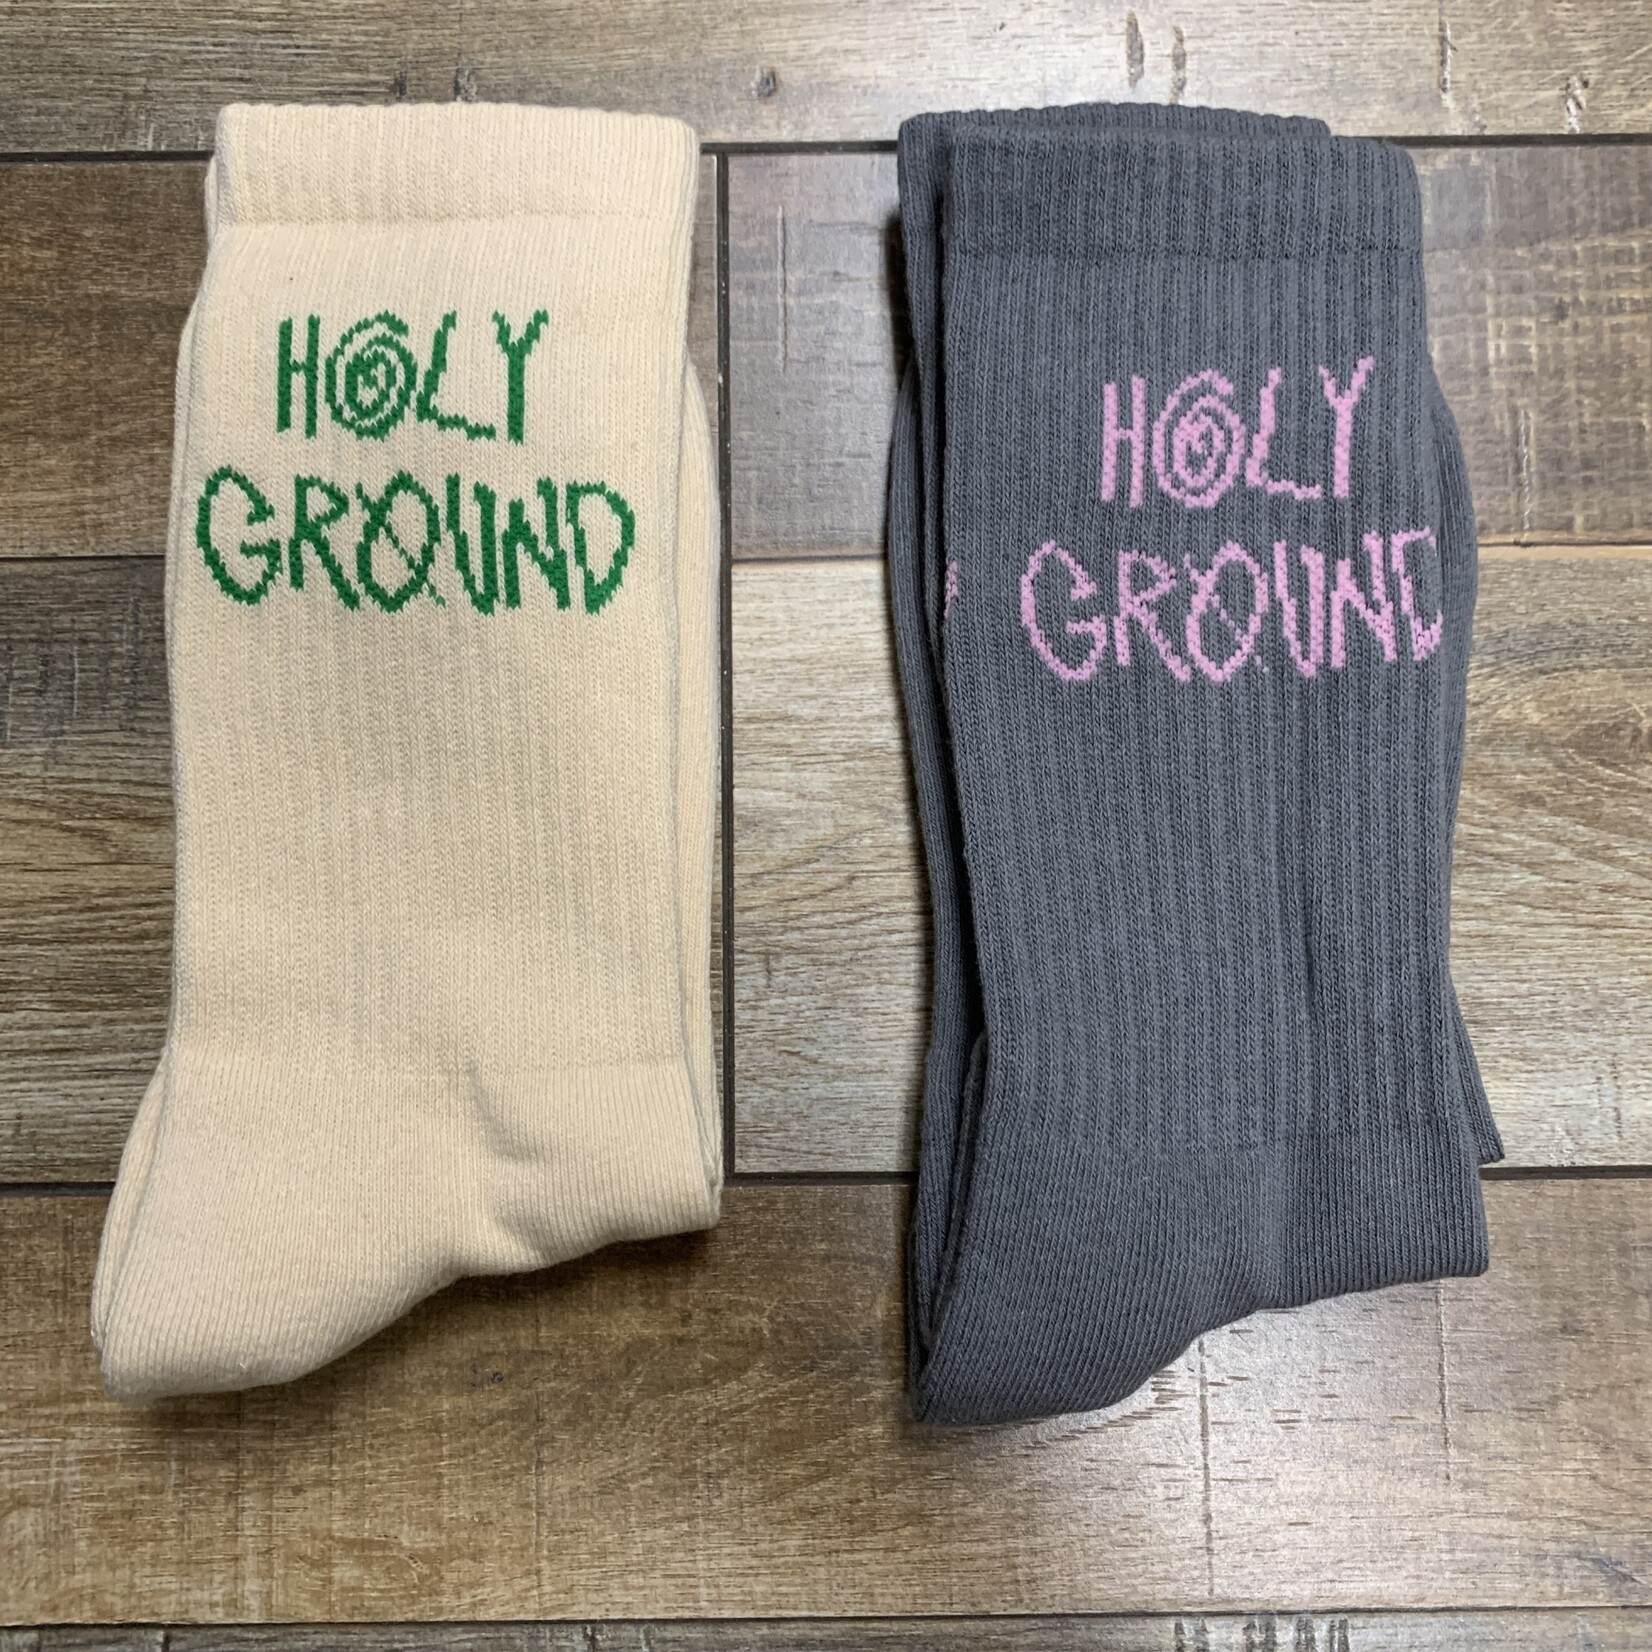 Holy Ground Holy Ground Socks